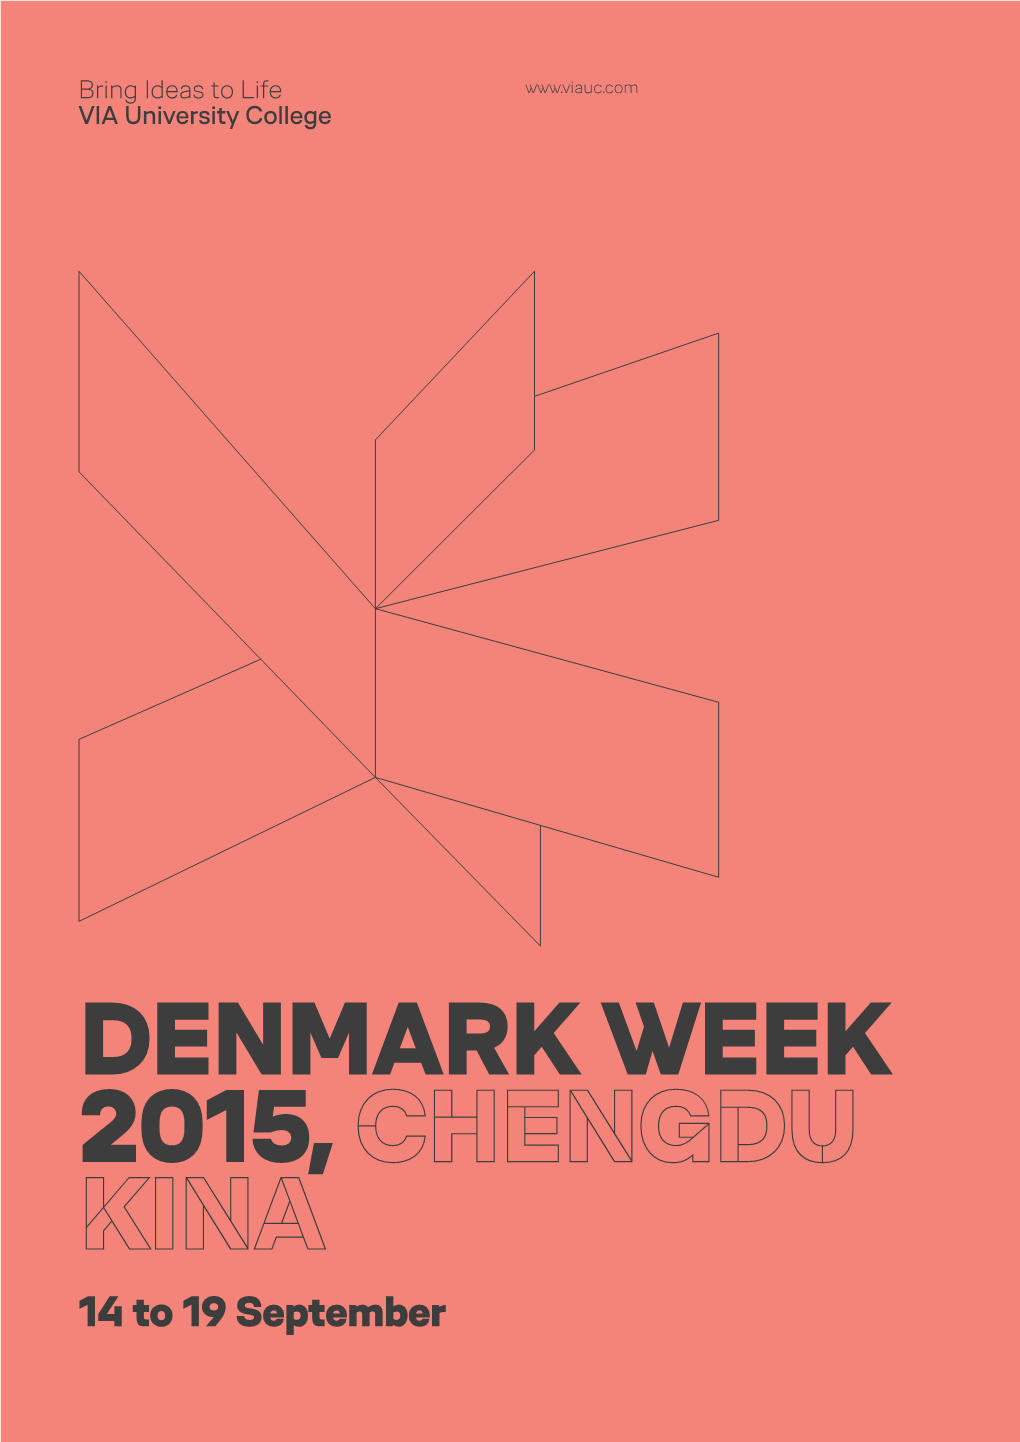 DENMARK WEEK 2015, CHENGDU KINA 14 to 19 September Bring Ideas to Life VIA University College